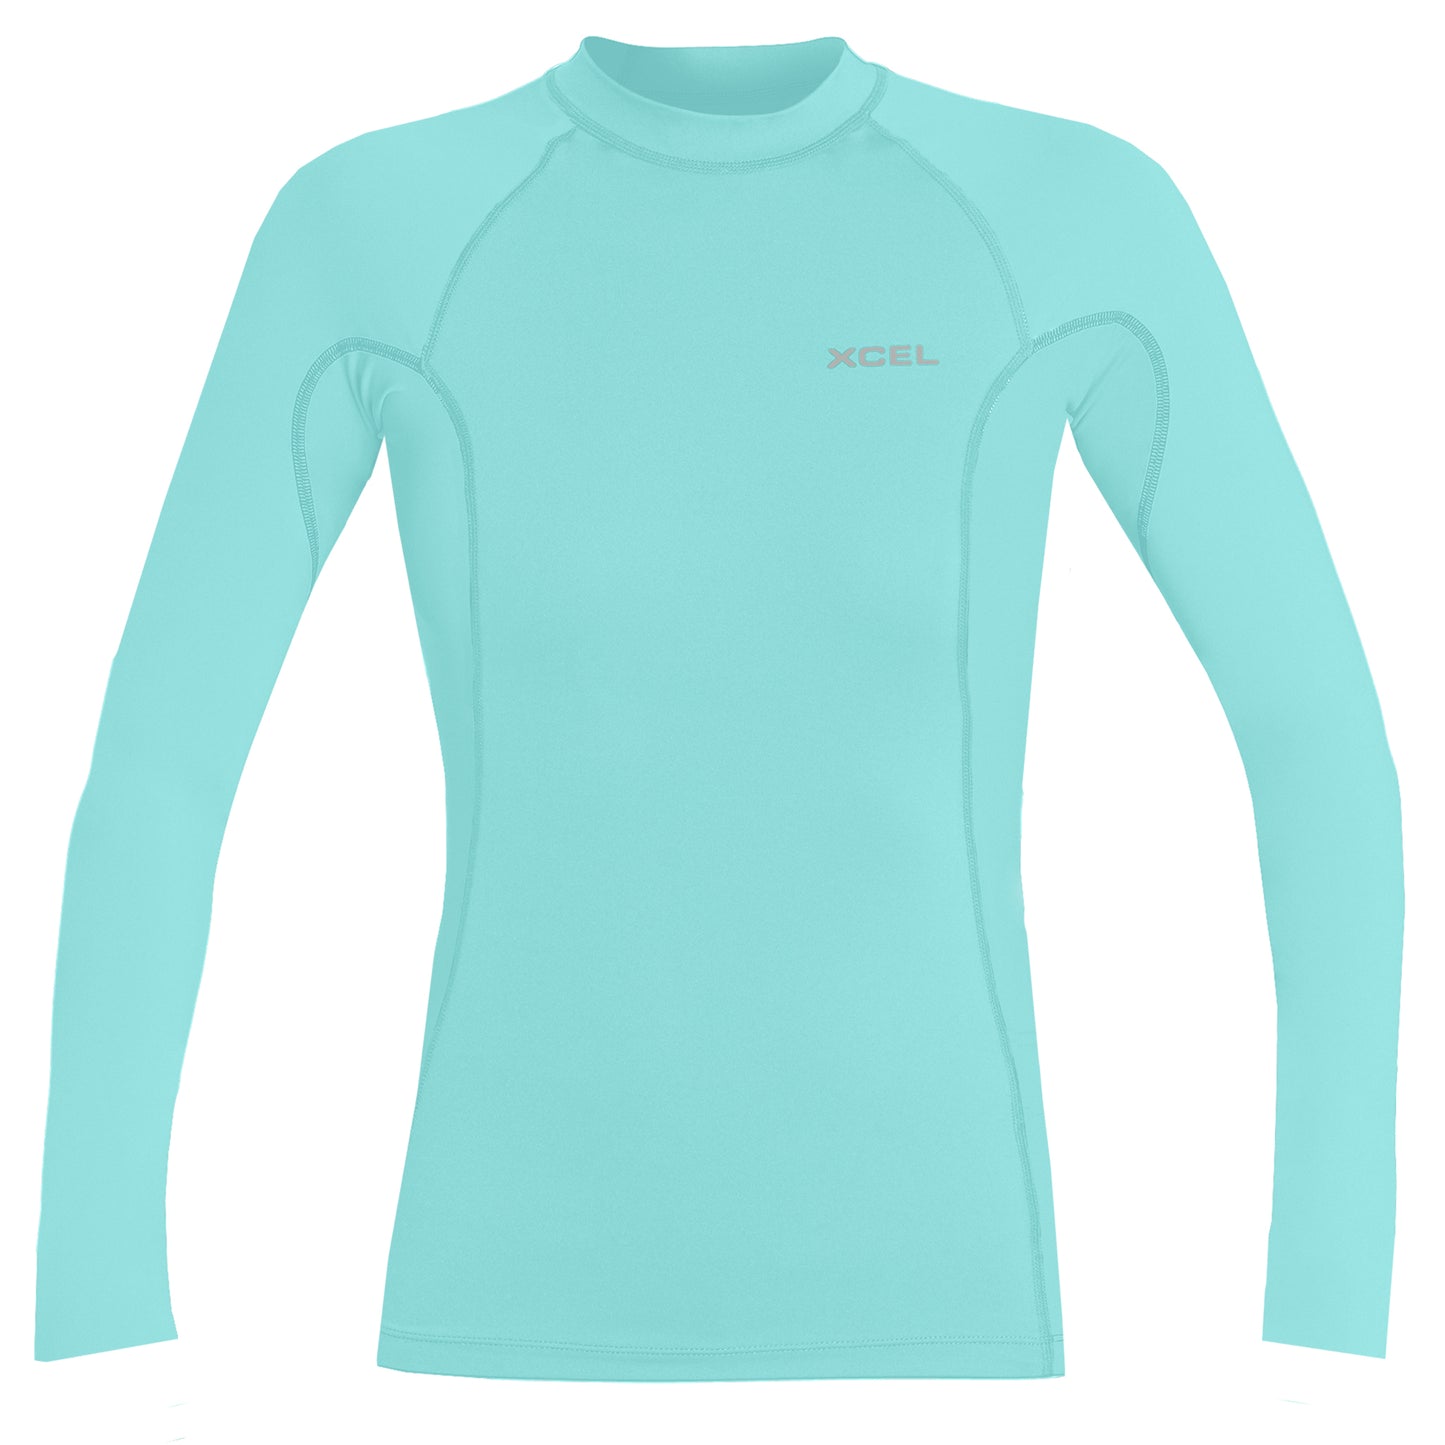 Girls Premium Stretch Short Sleeve Performance Fit UV Top